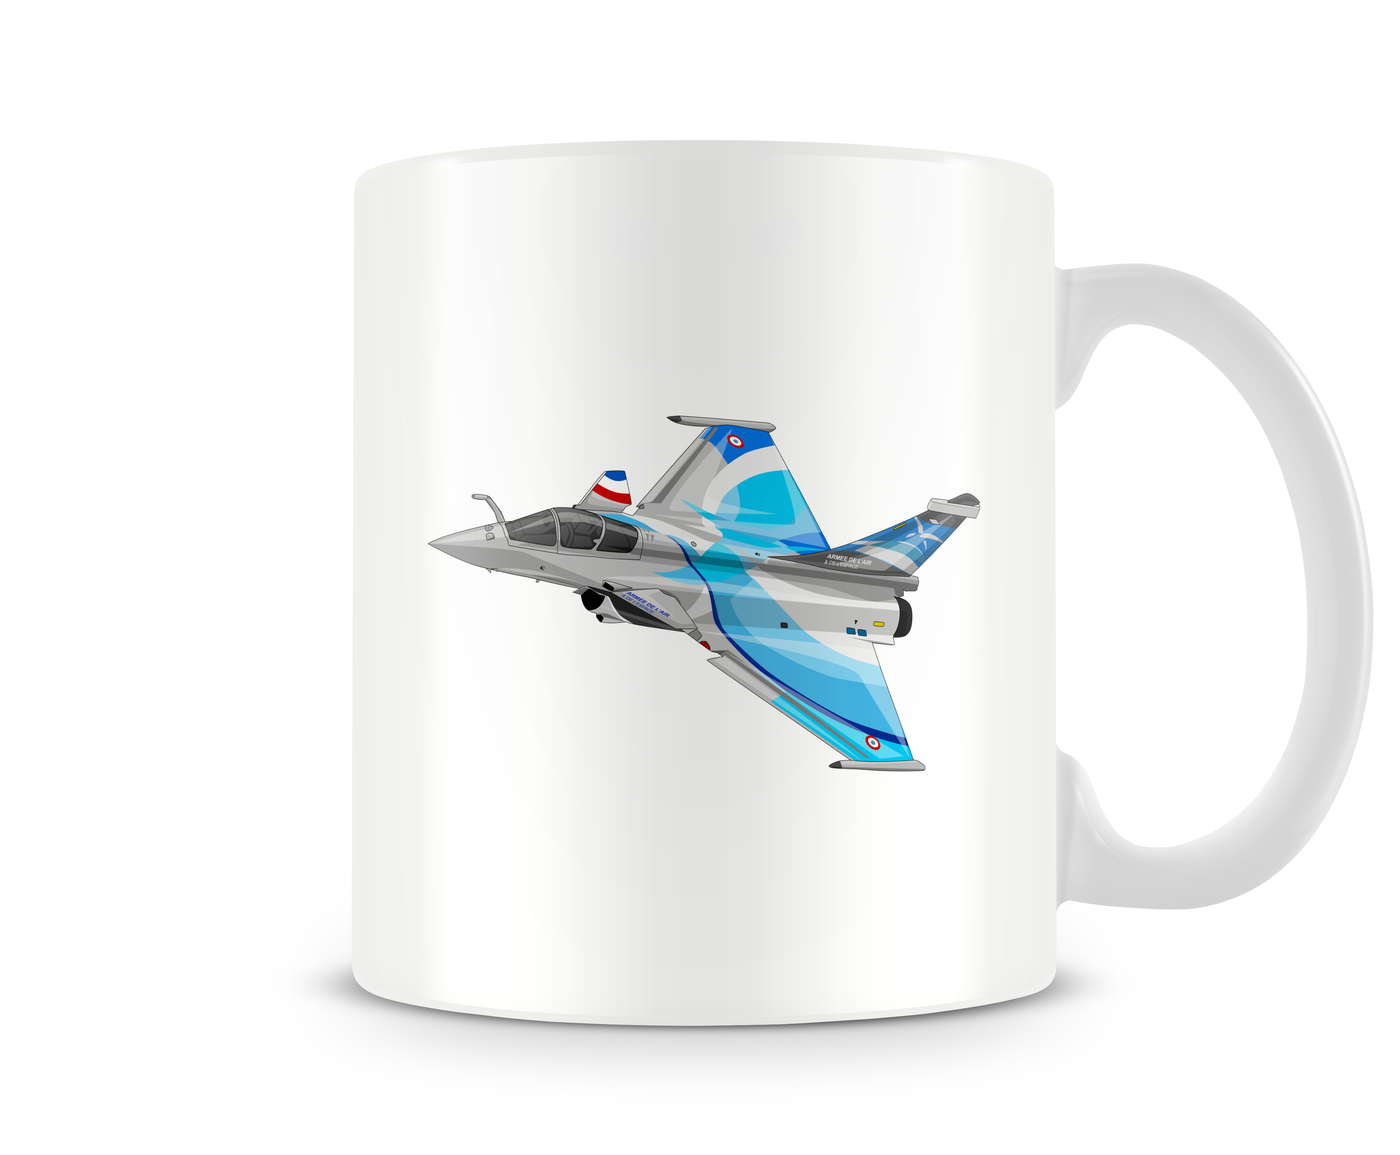 Dassault Rafale Mug - Aircraft Mugs